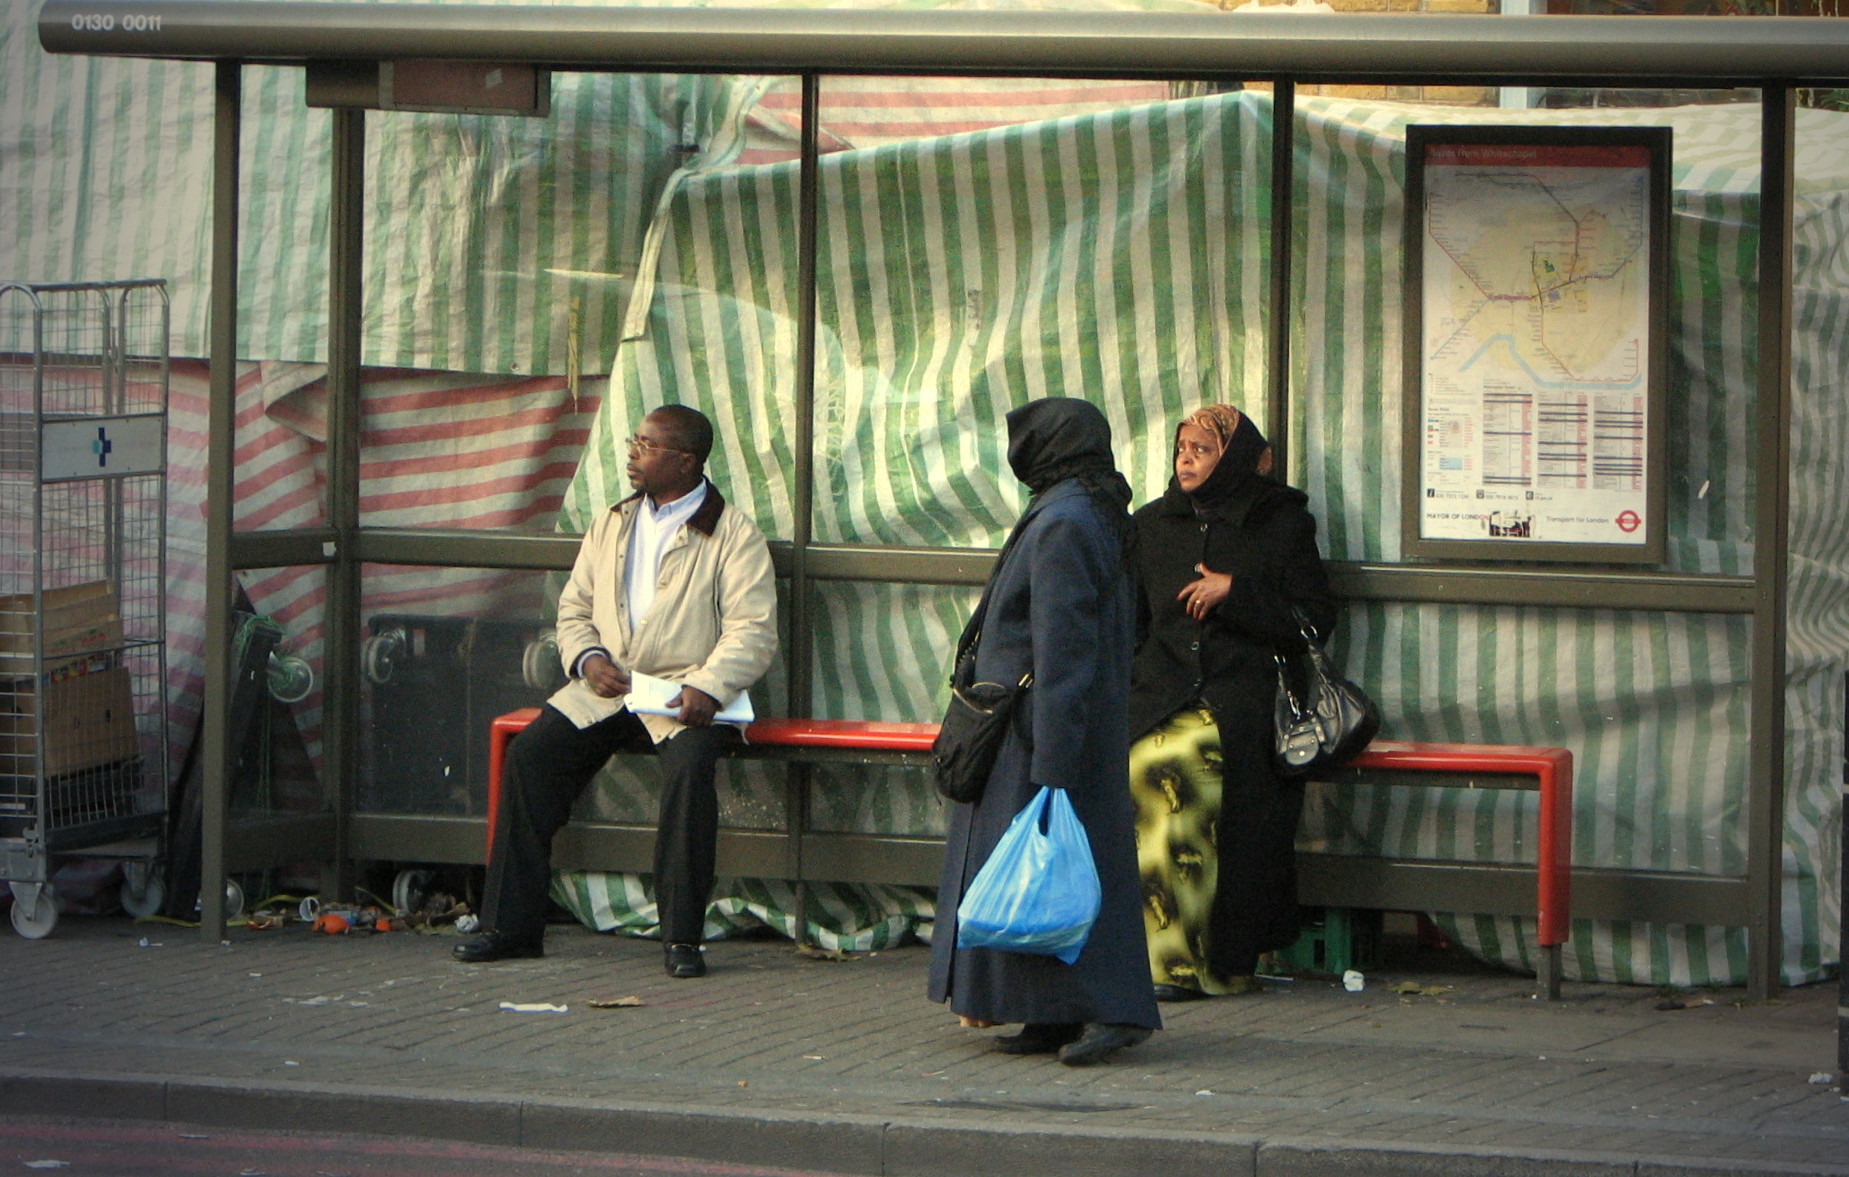 Whitechapel bus stop.jpg